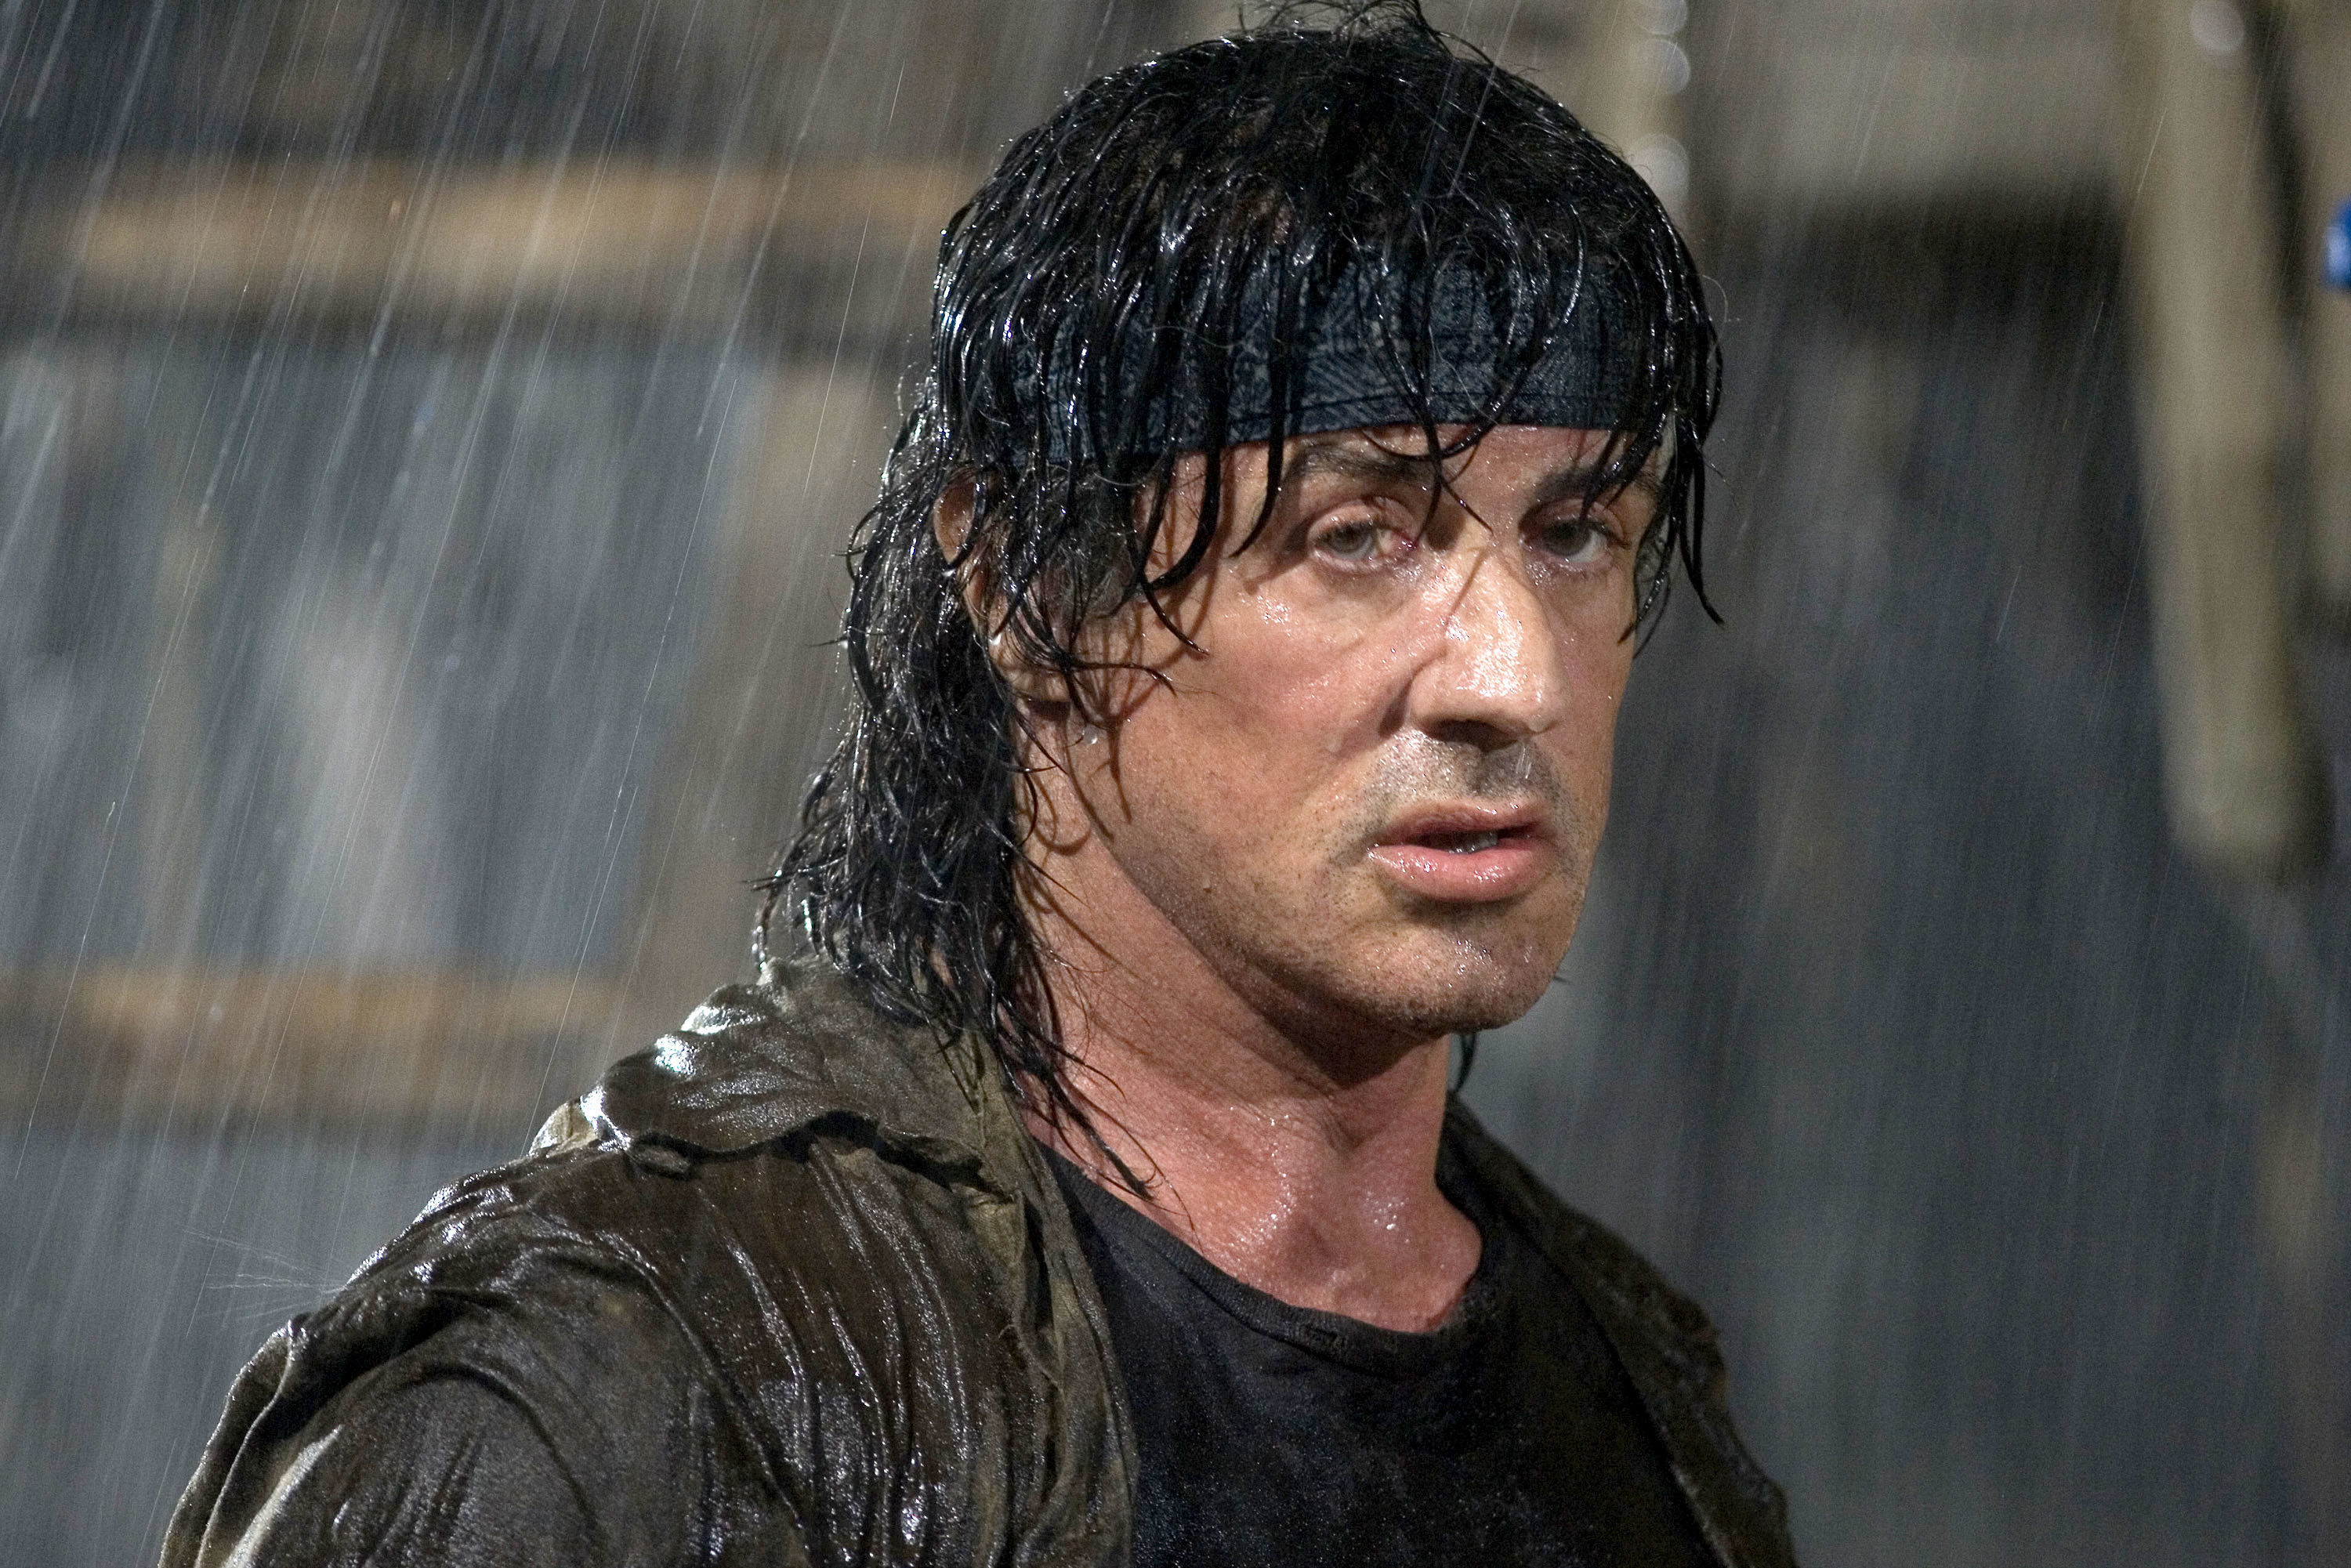 Sylvester as Rambo in the rain